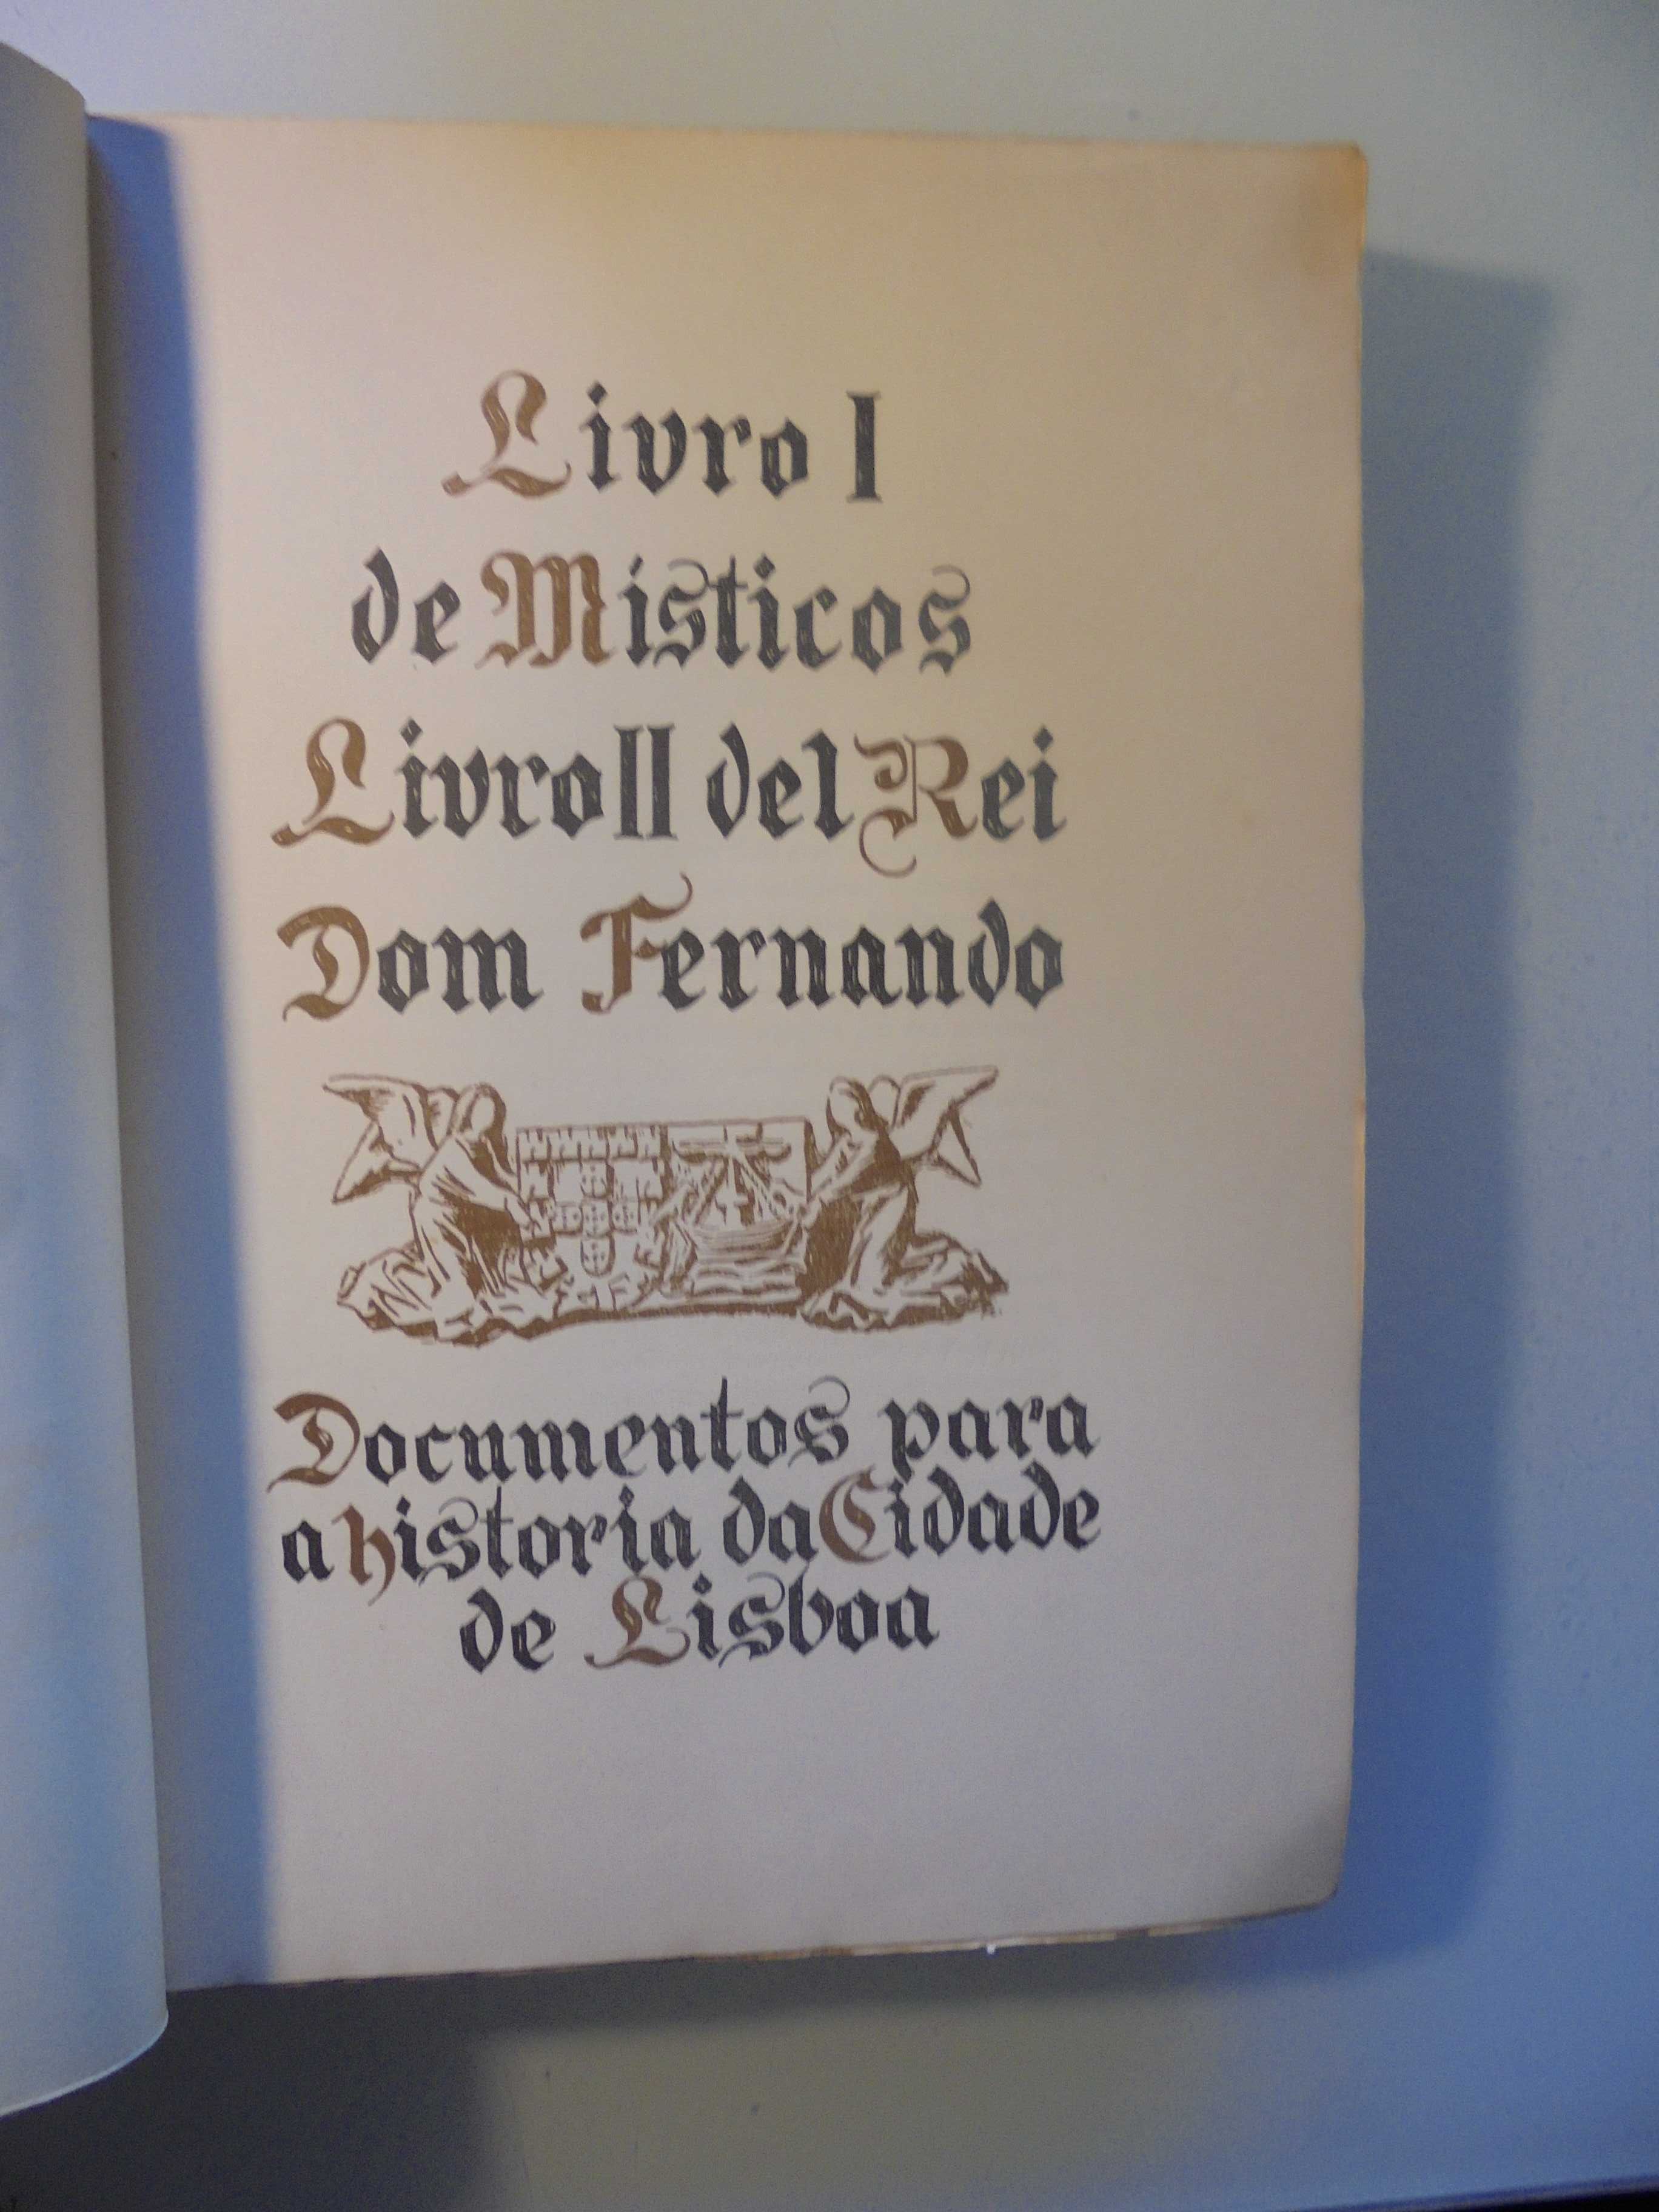 Lisboa-;Livro I de Místicos-Livro II del Rei D.Fernando